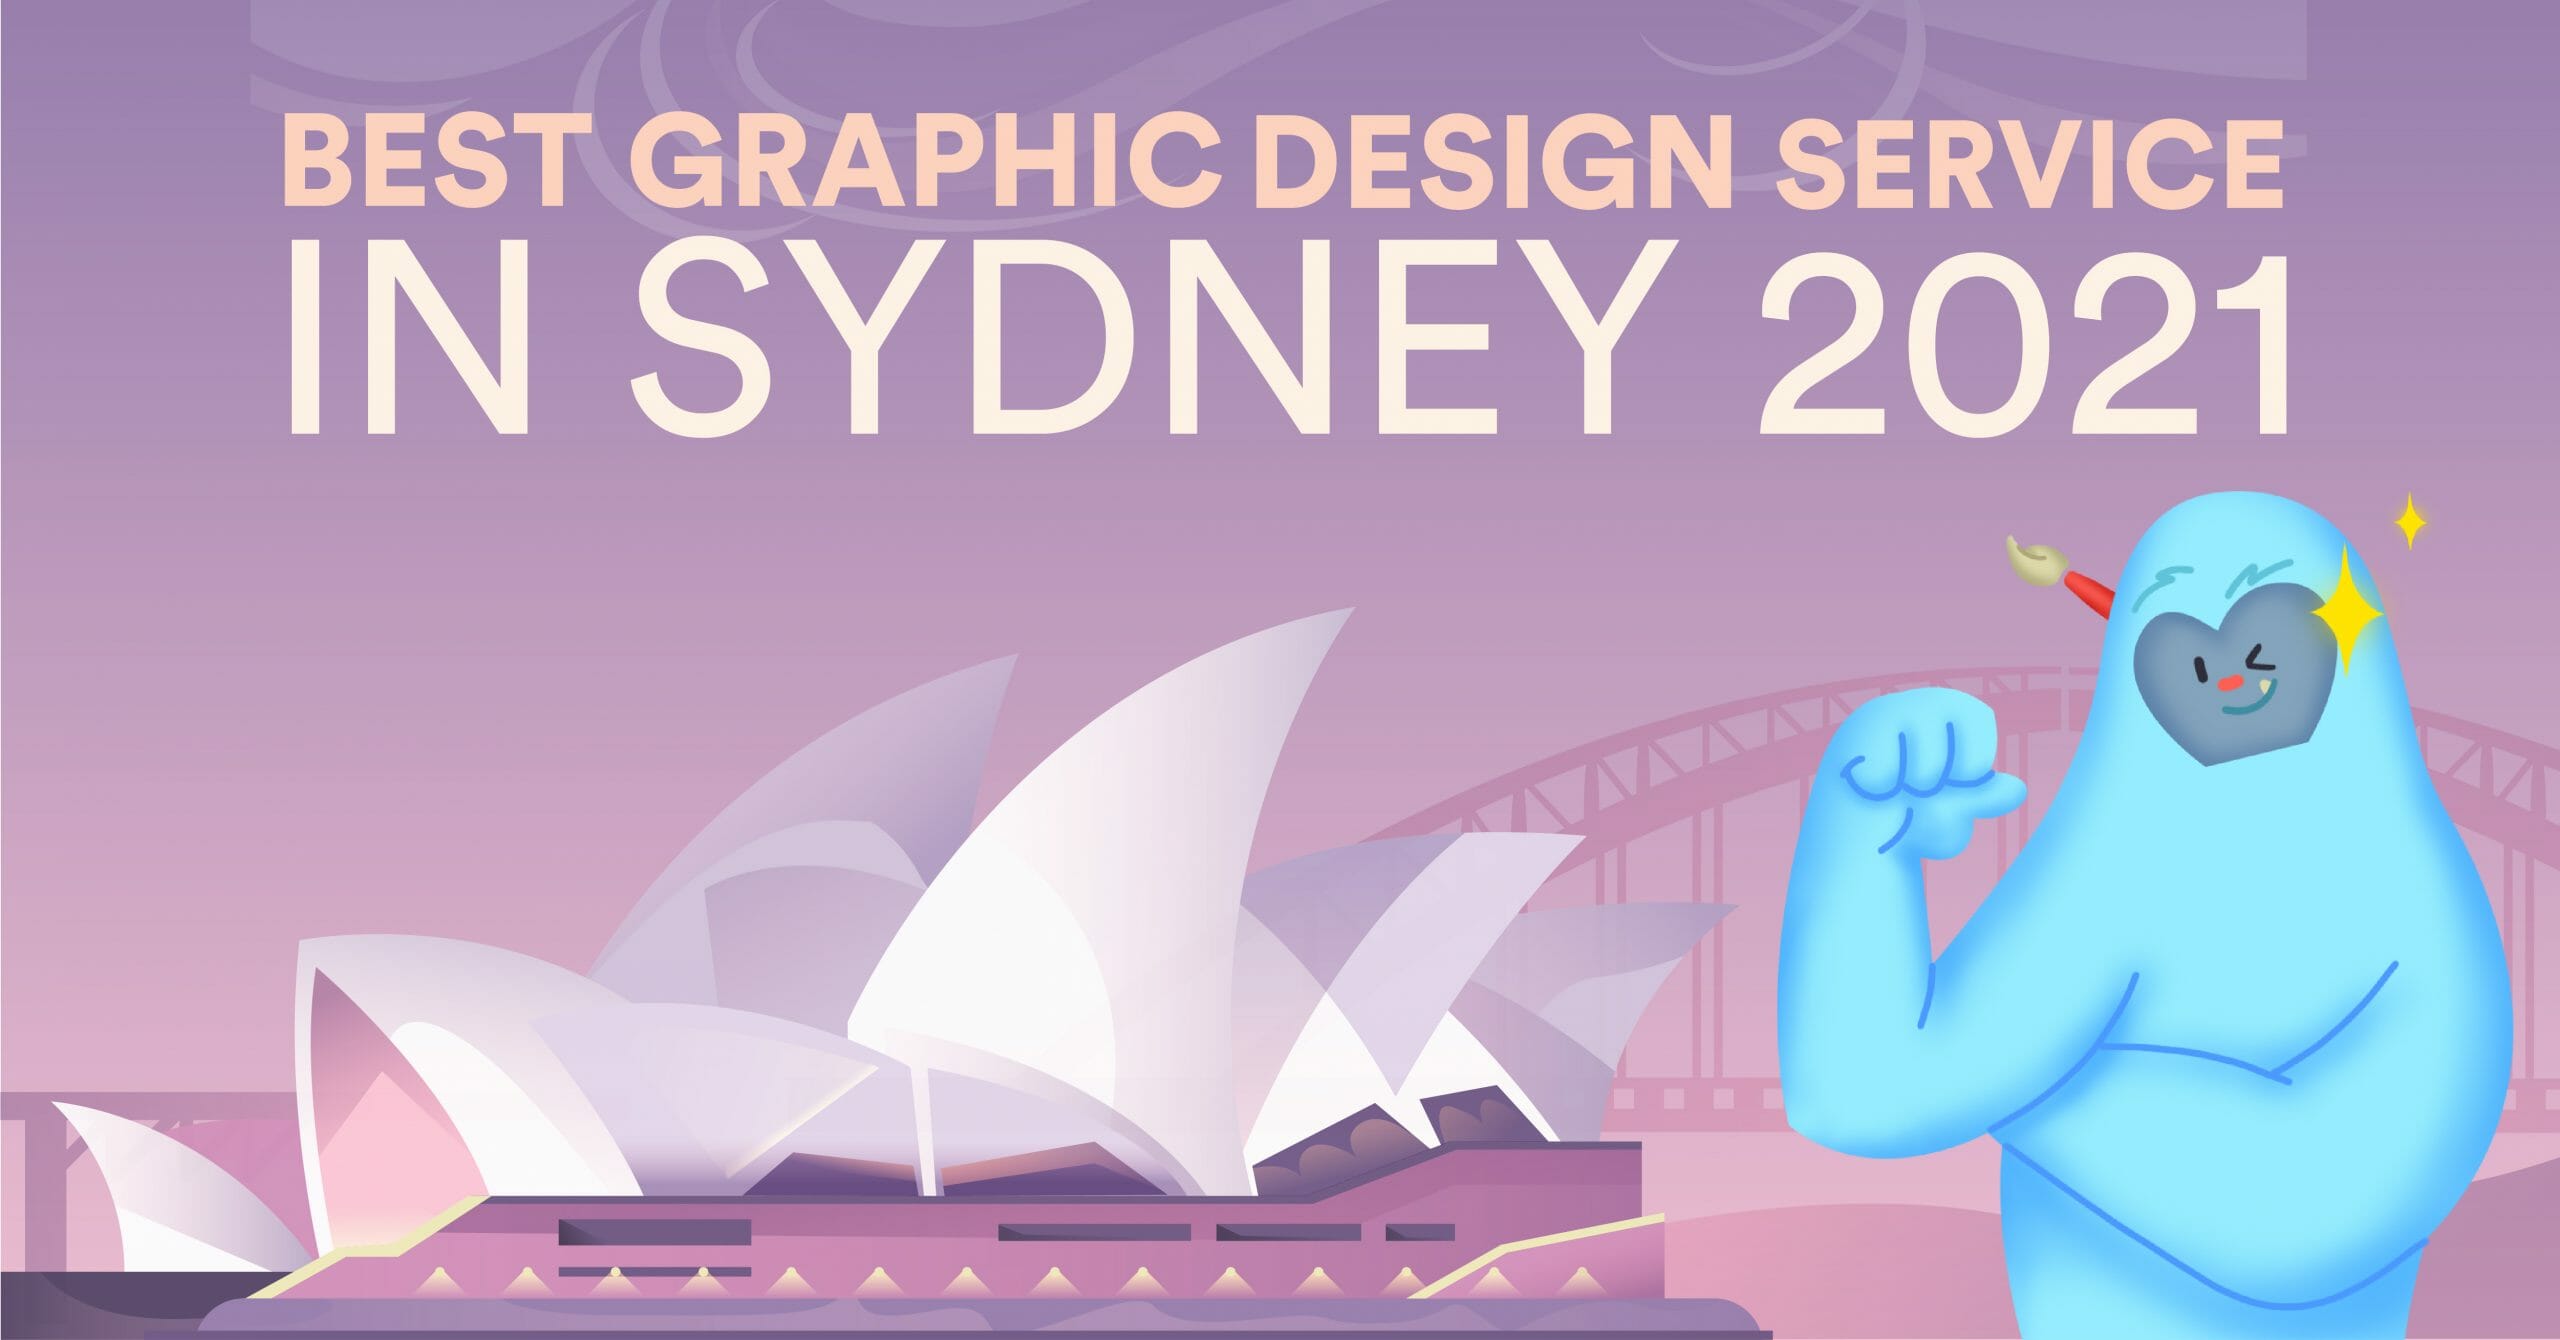 Top 5 Graphic Design Services in Sydney